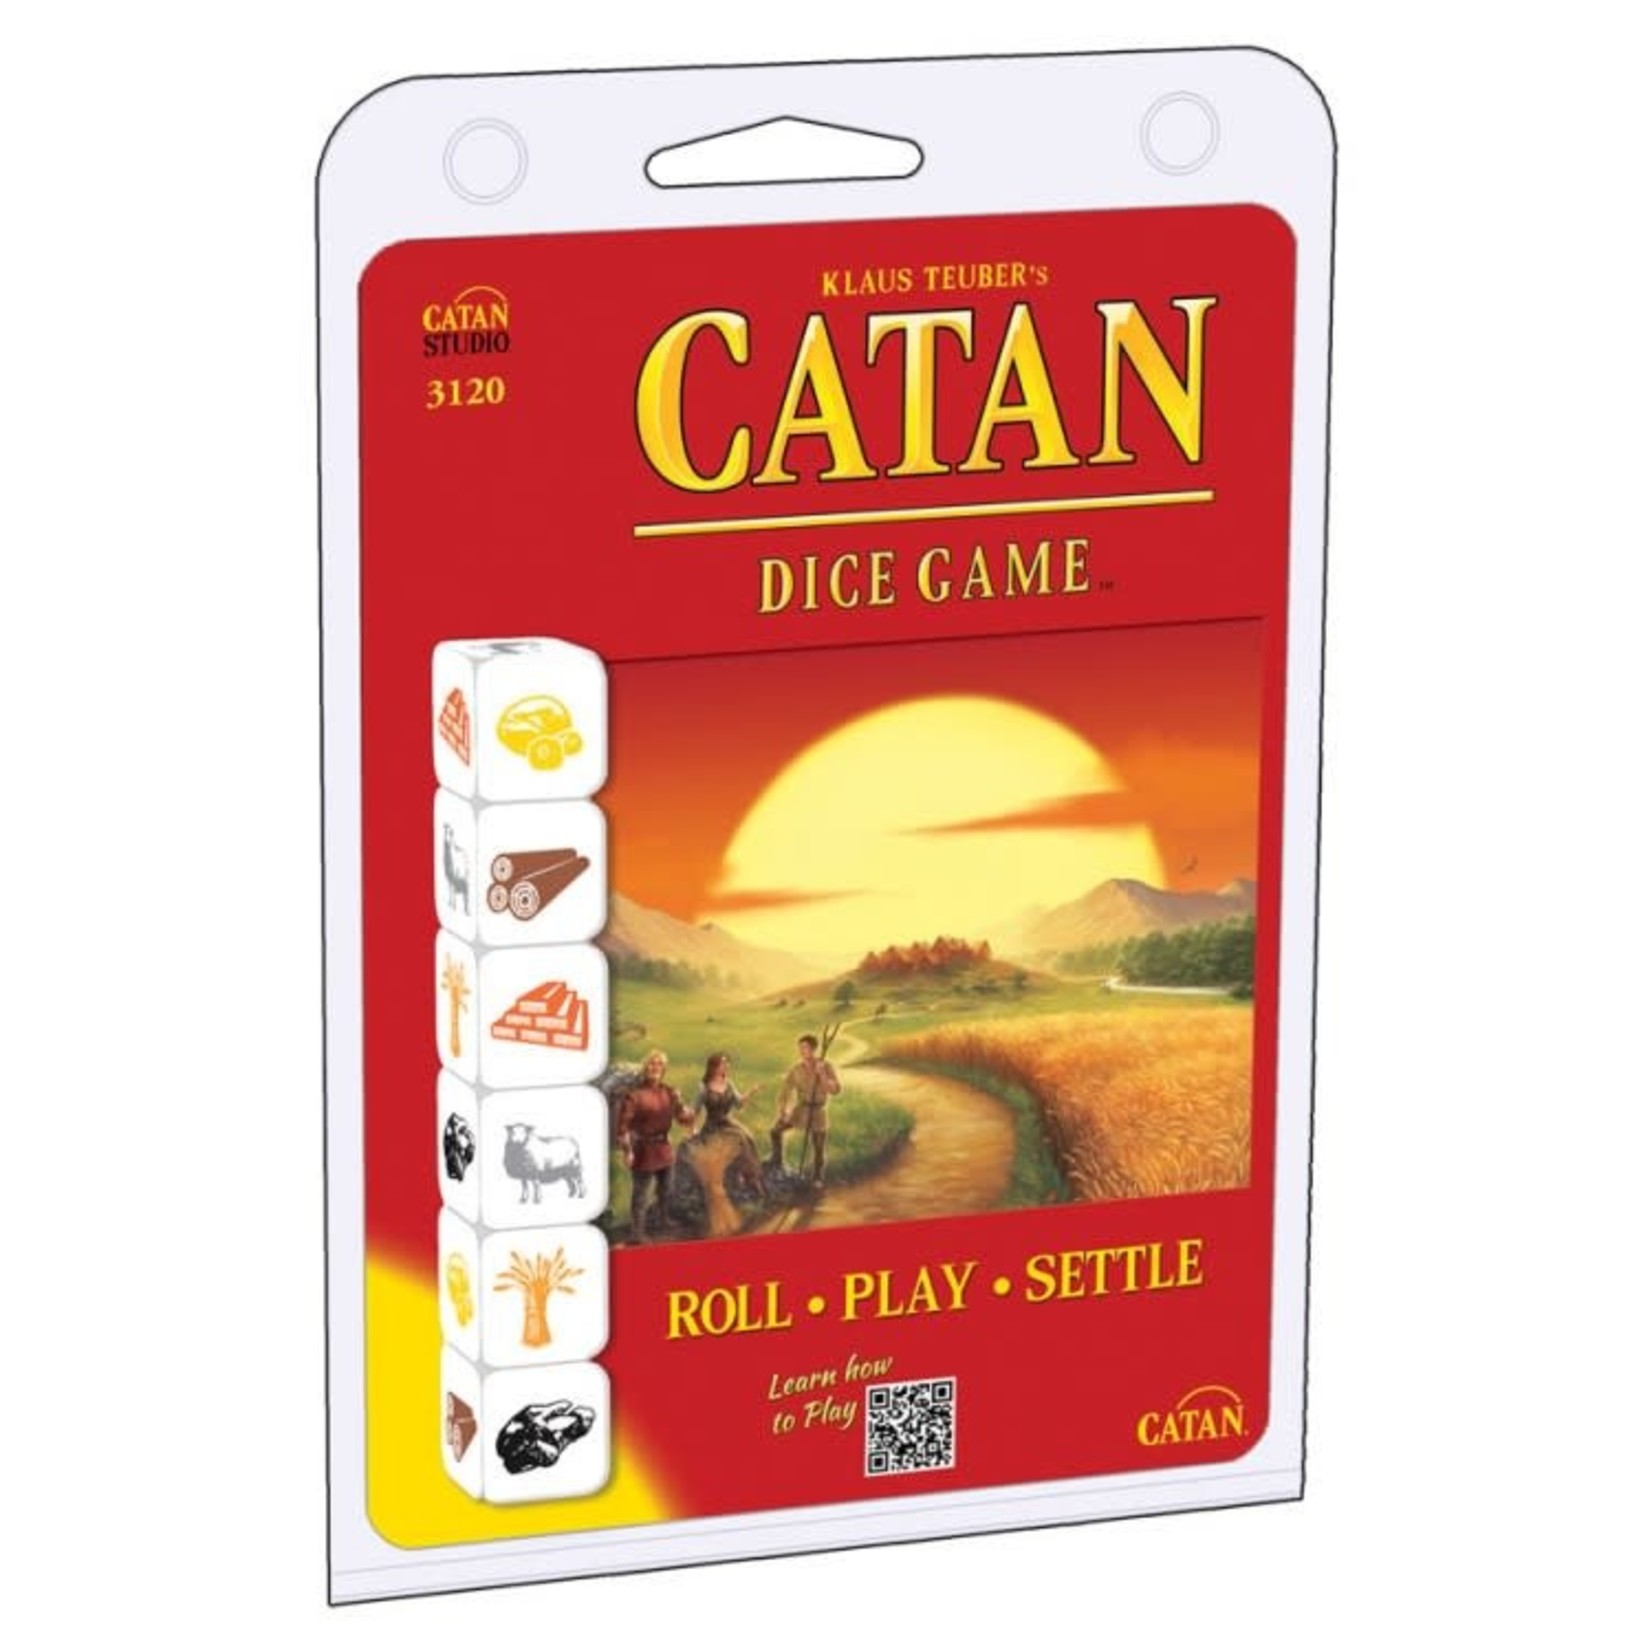 Catan Studio Catan Dice Game Clamshell Edition